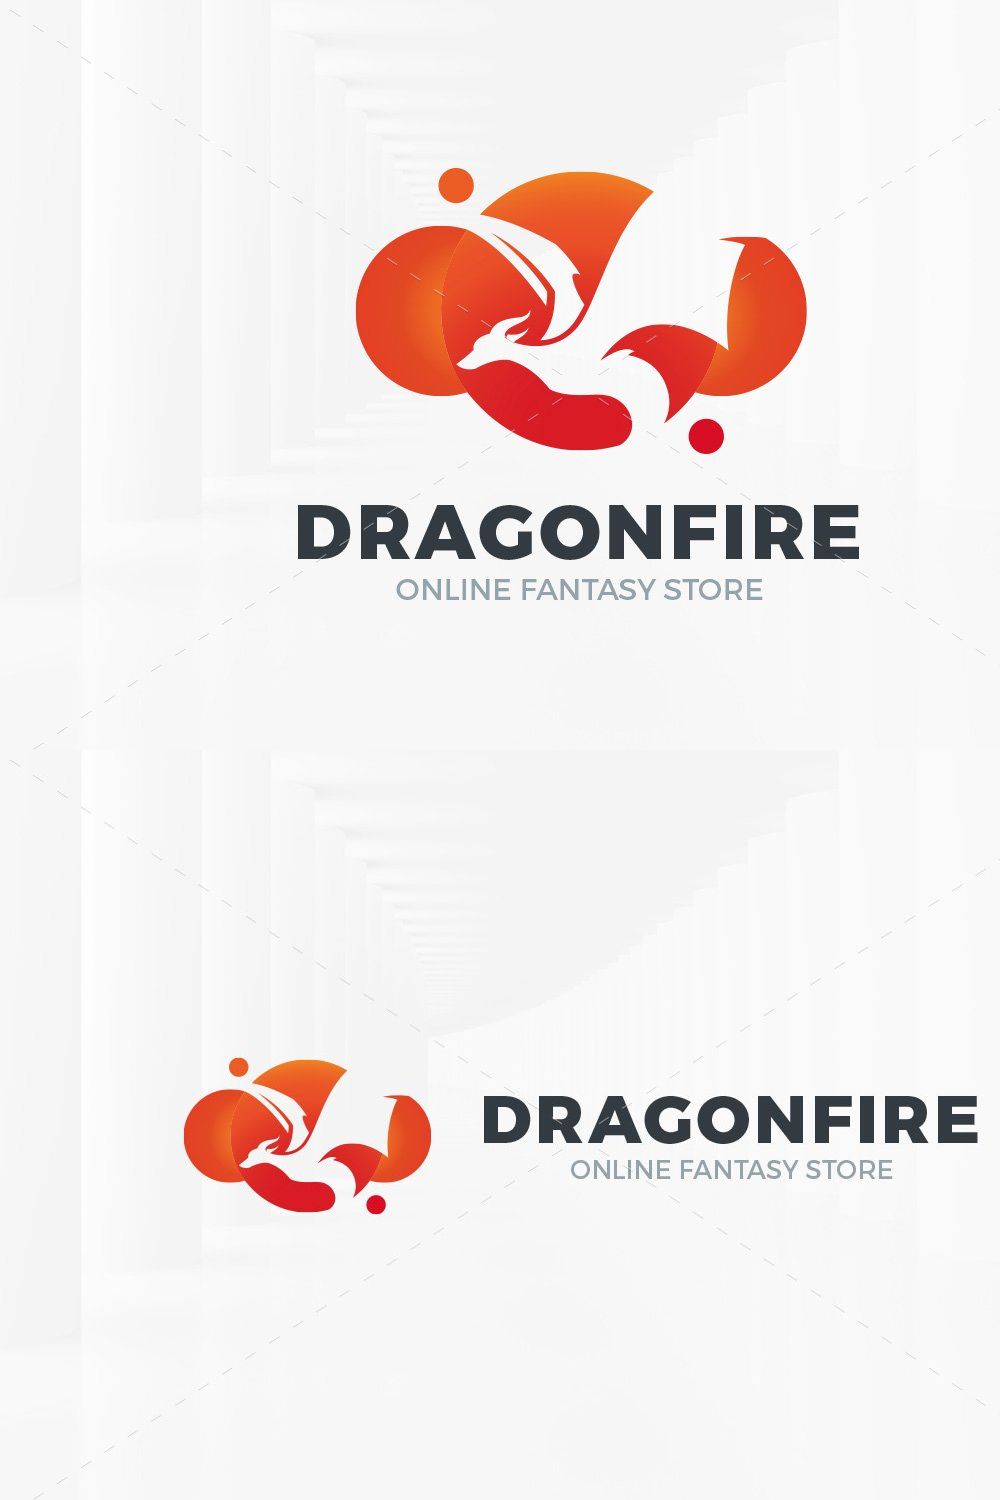 Dragon Fire pinterest preview image.